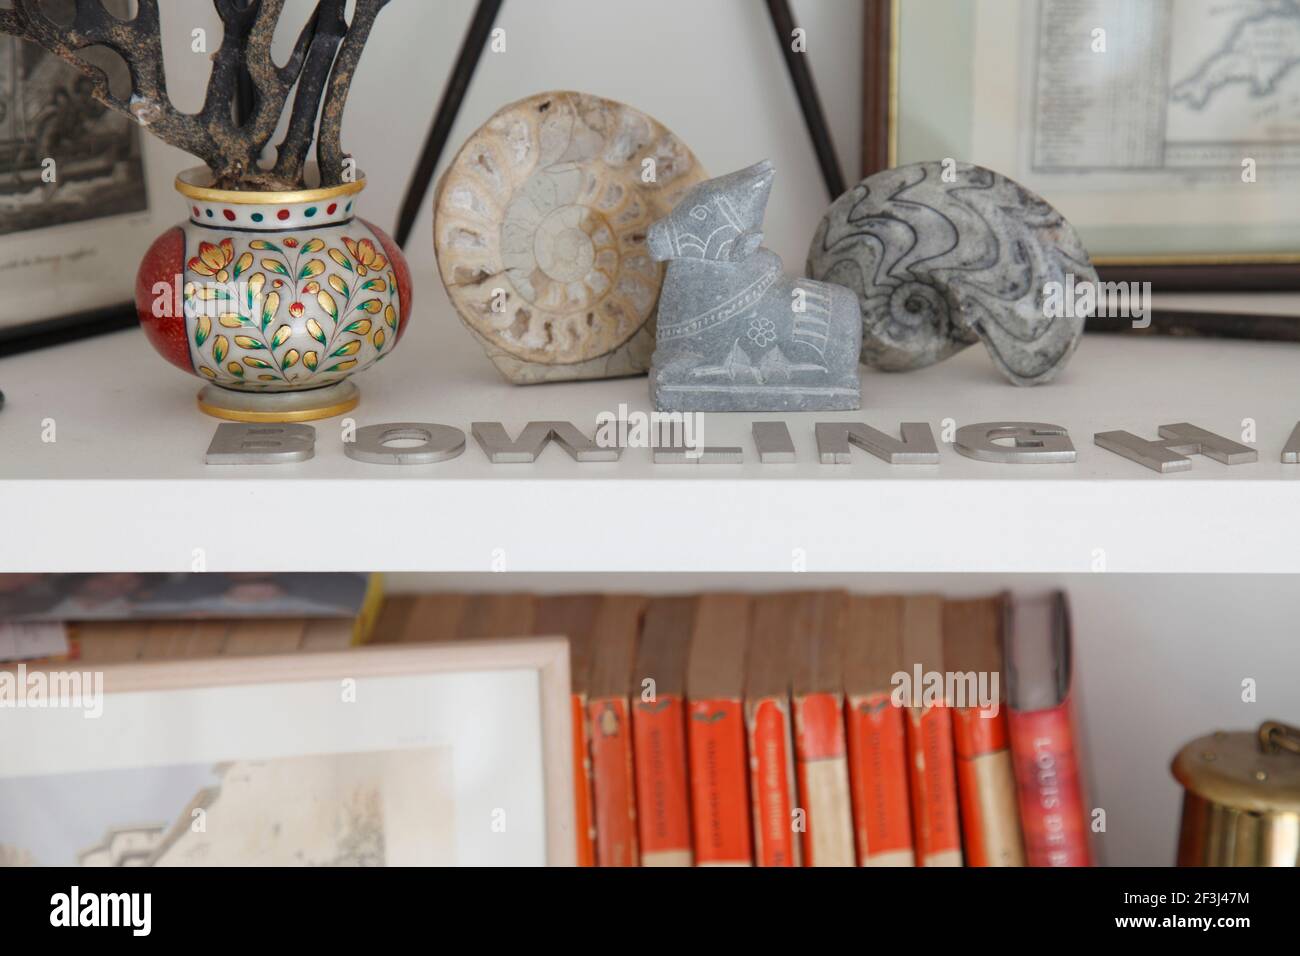 Antiques on bookshelves | Architect: Silk Mews Architects | Stock Photo